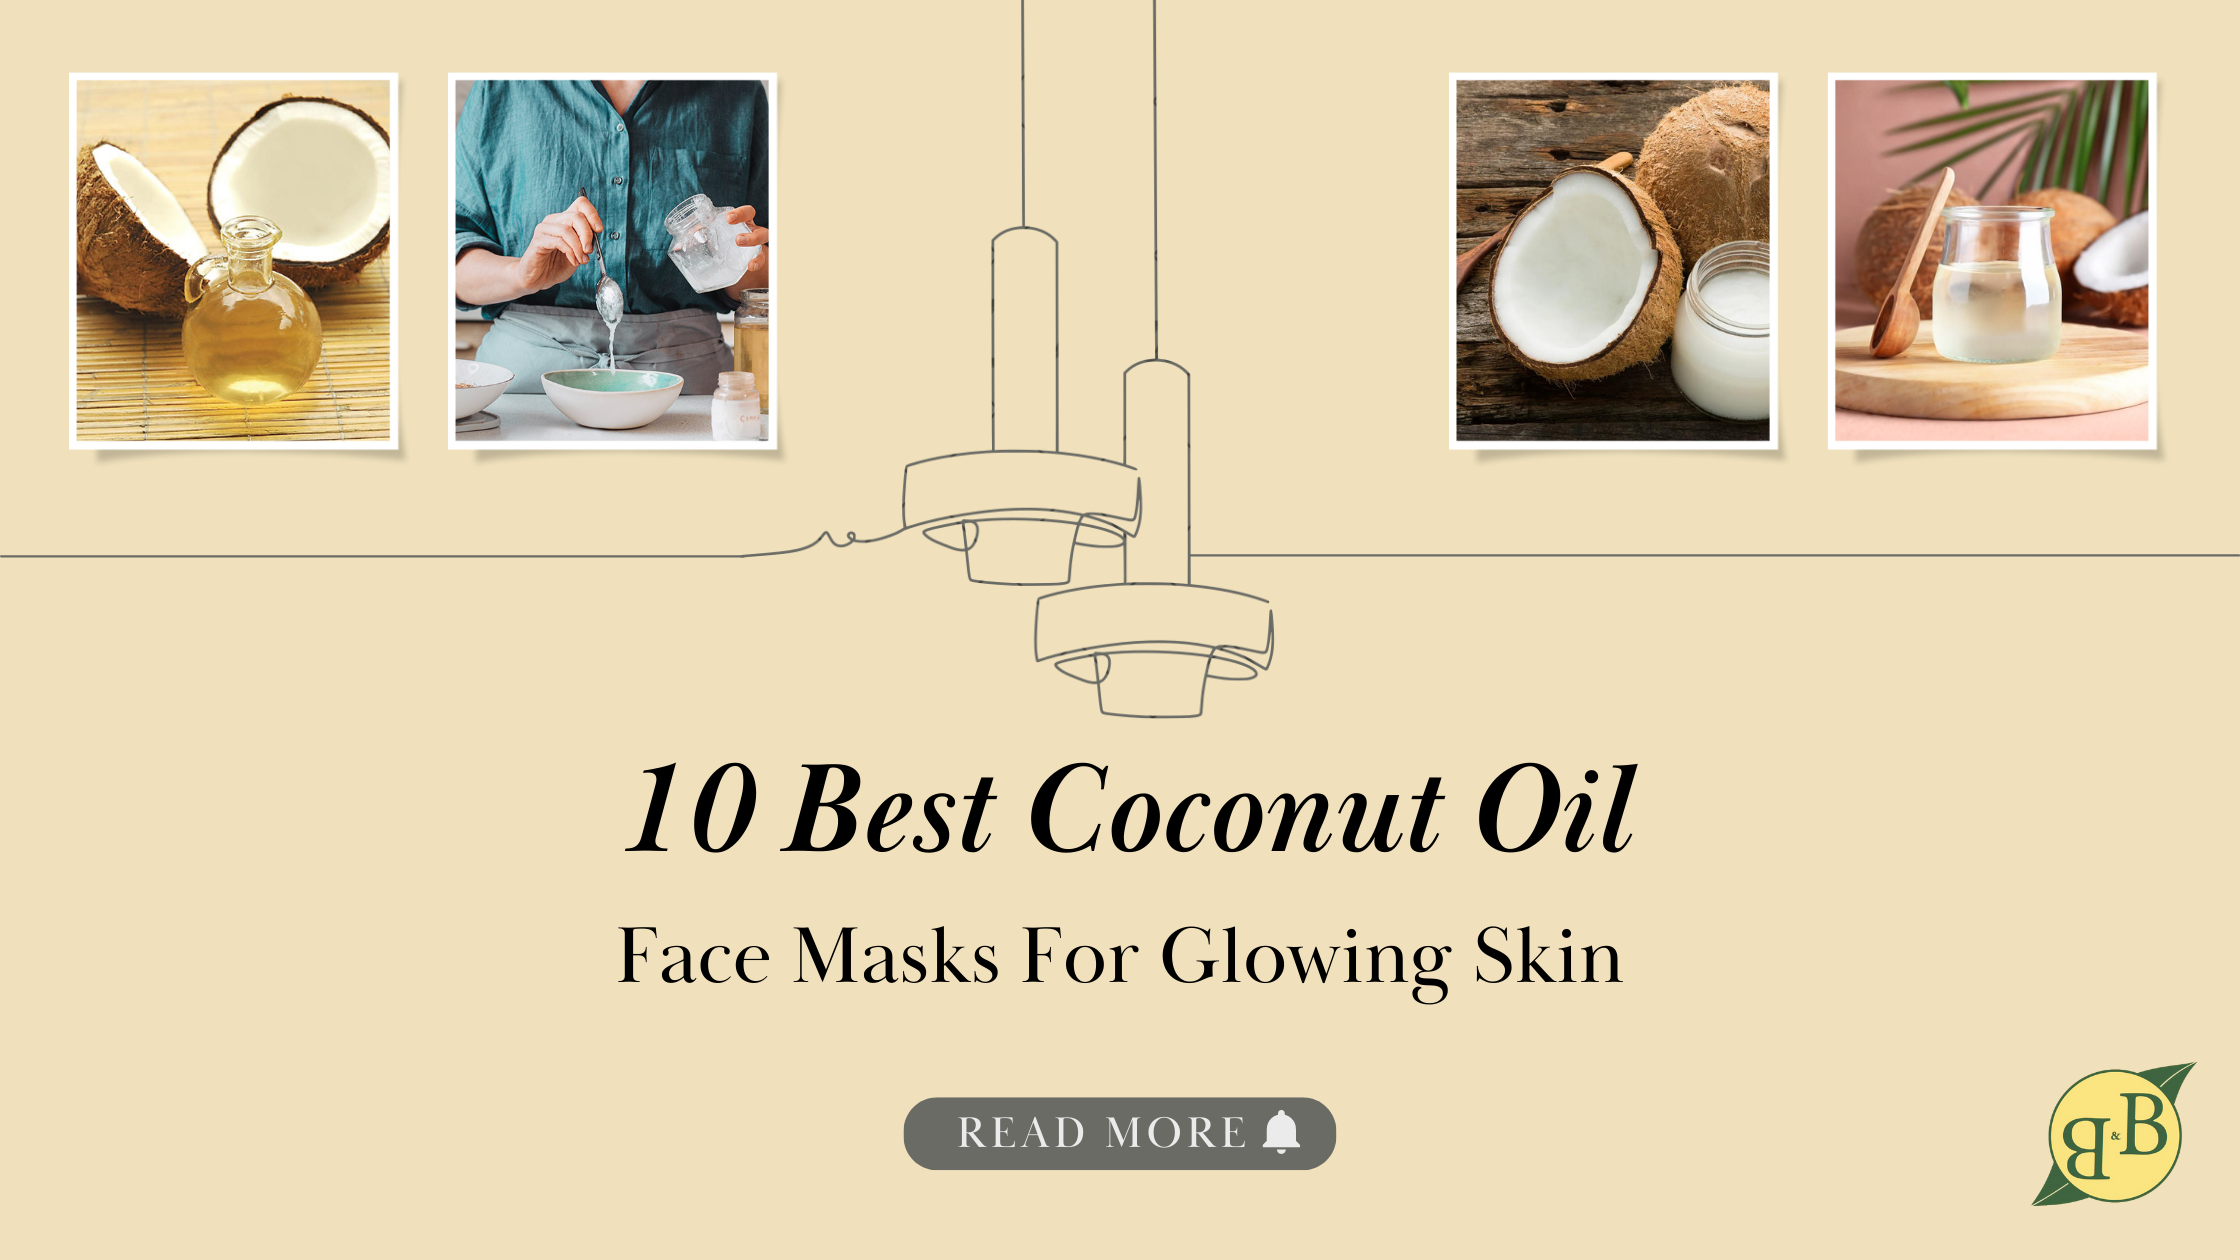 10 Best Coconut Oil Face Masks For Glowing Skin – B&B Organics